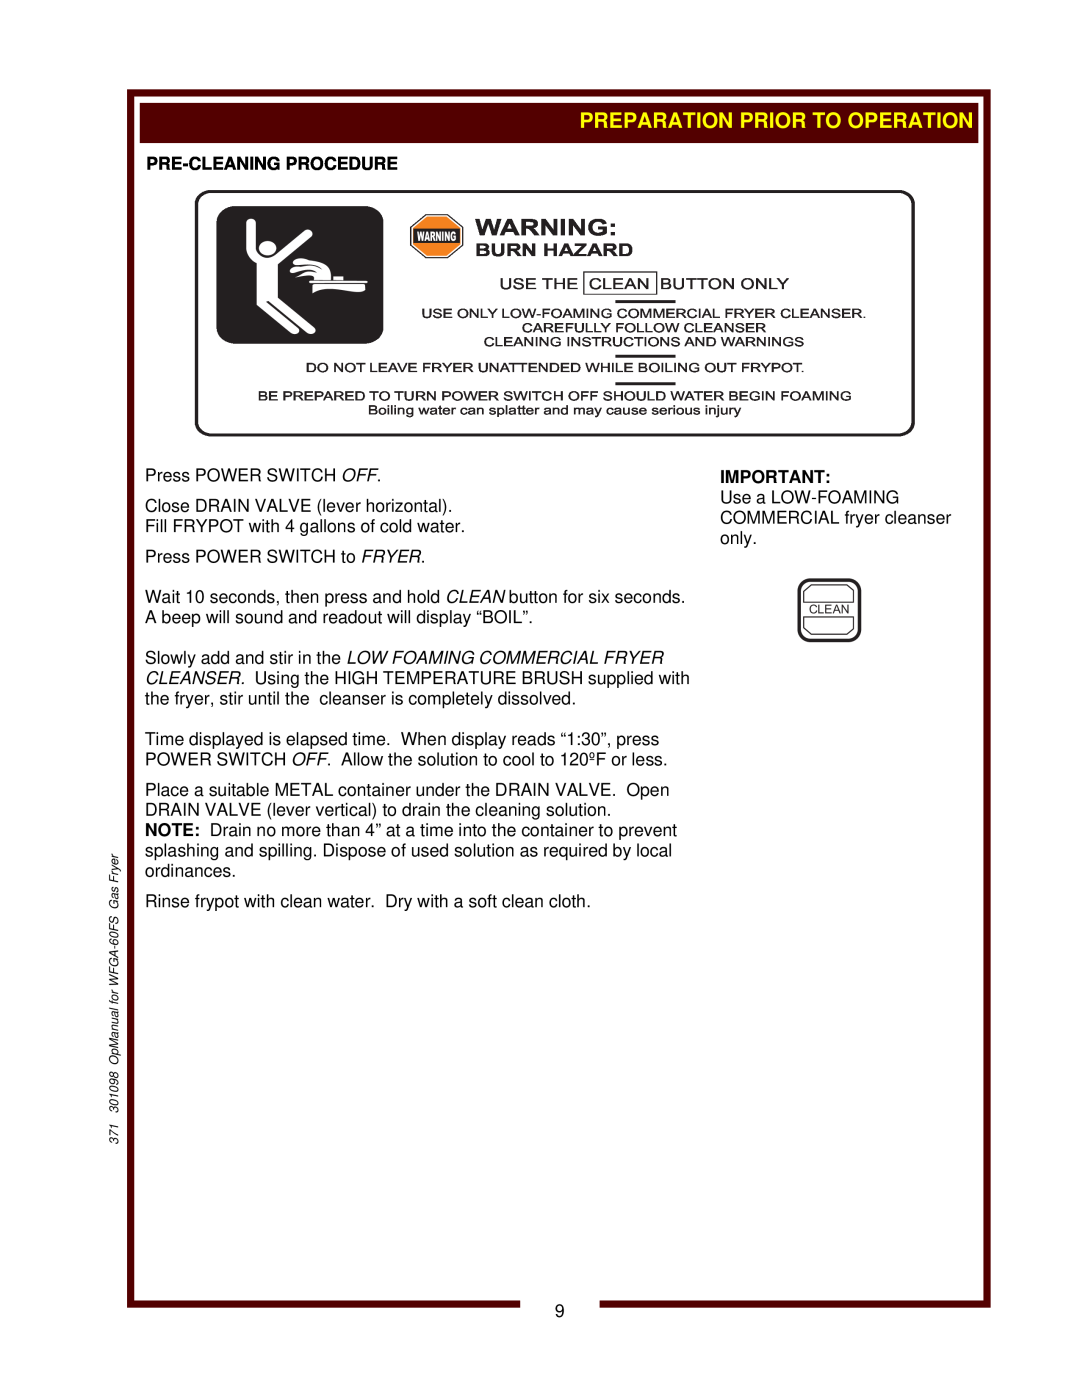 Wells WFGA-60FS operation manual Pre-Cleaning Procedure, Burn Hazard, Warning Warning 